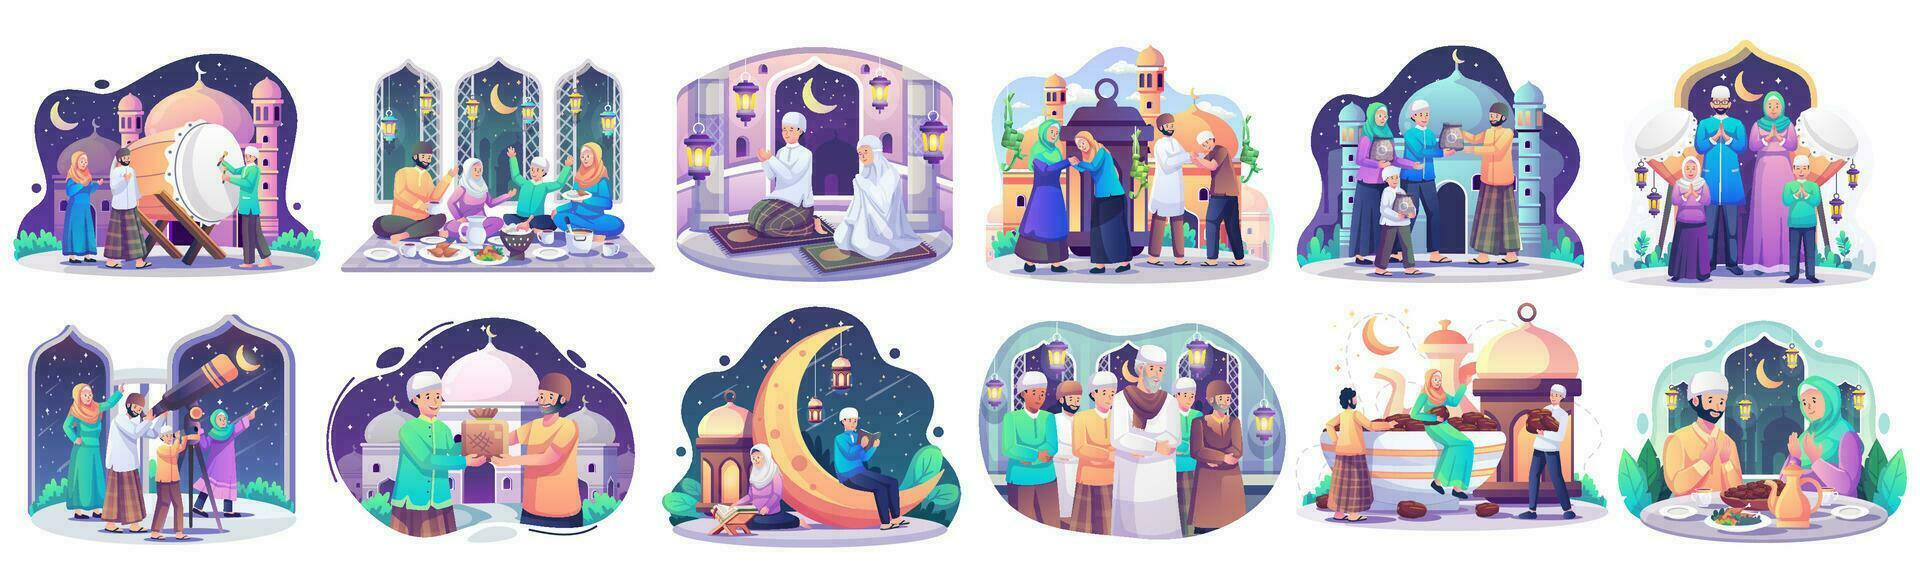 conjunto colección de Ramadán concepto ilustración. contento musulmán personas celebrar santo mes ramadán, iftar fiesta, leyendo corán, taraweeh, eid Mubarak saludo. vector ilustración